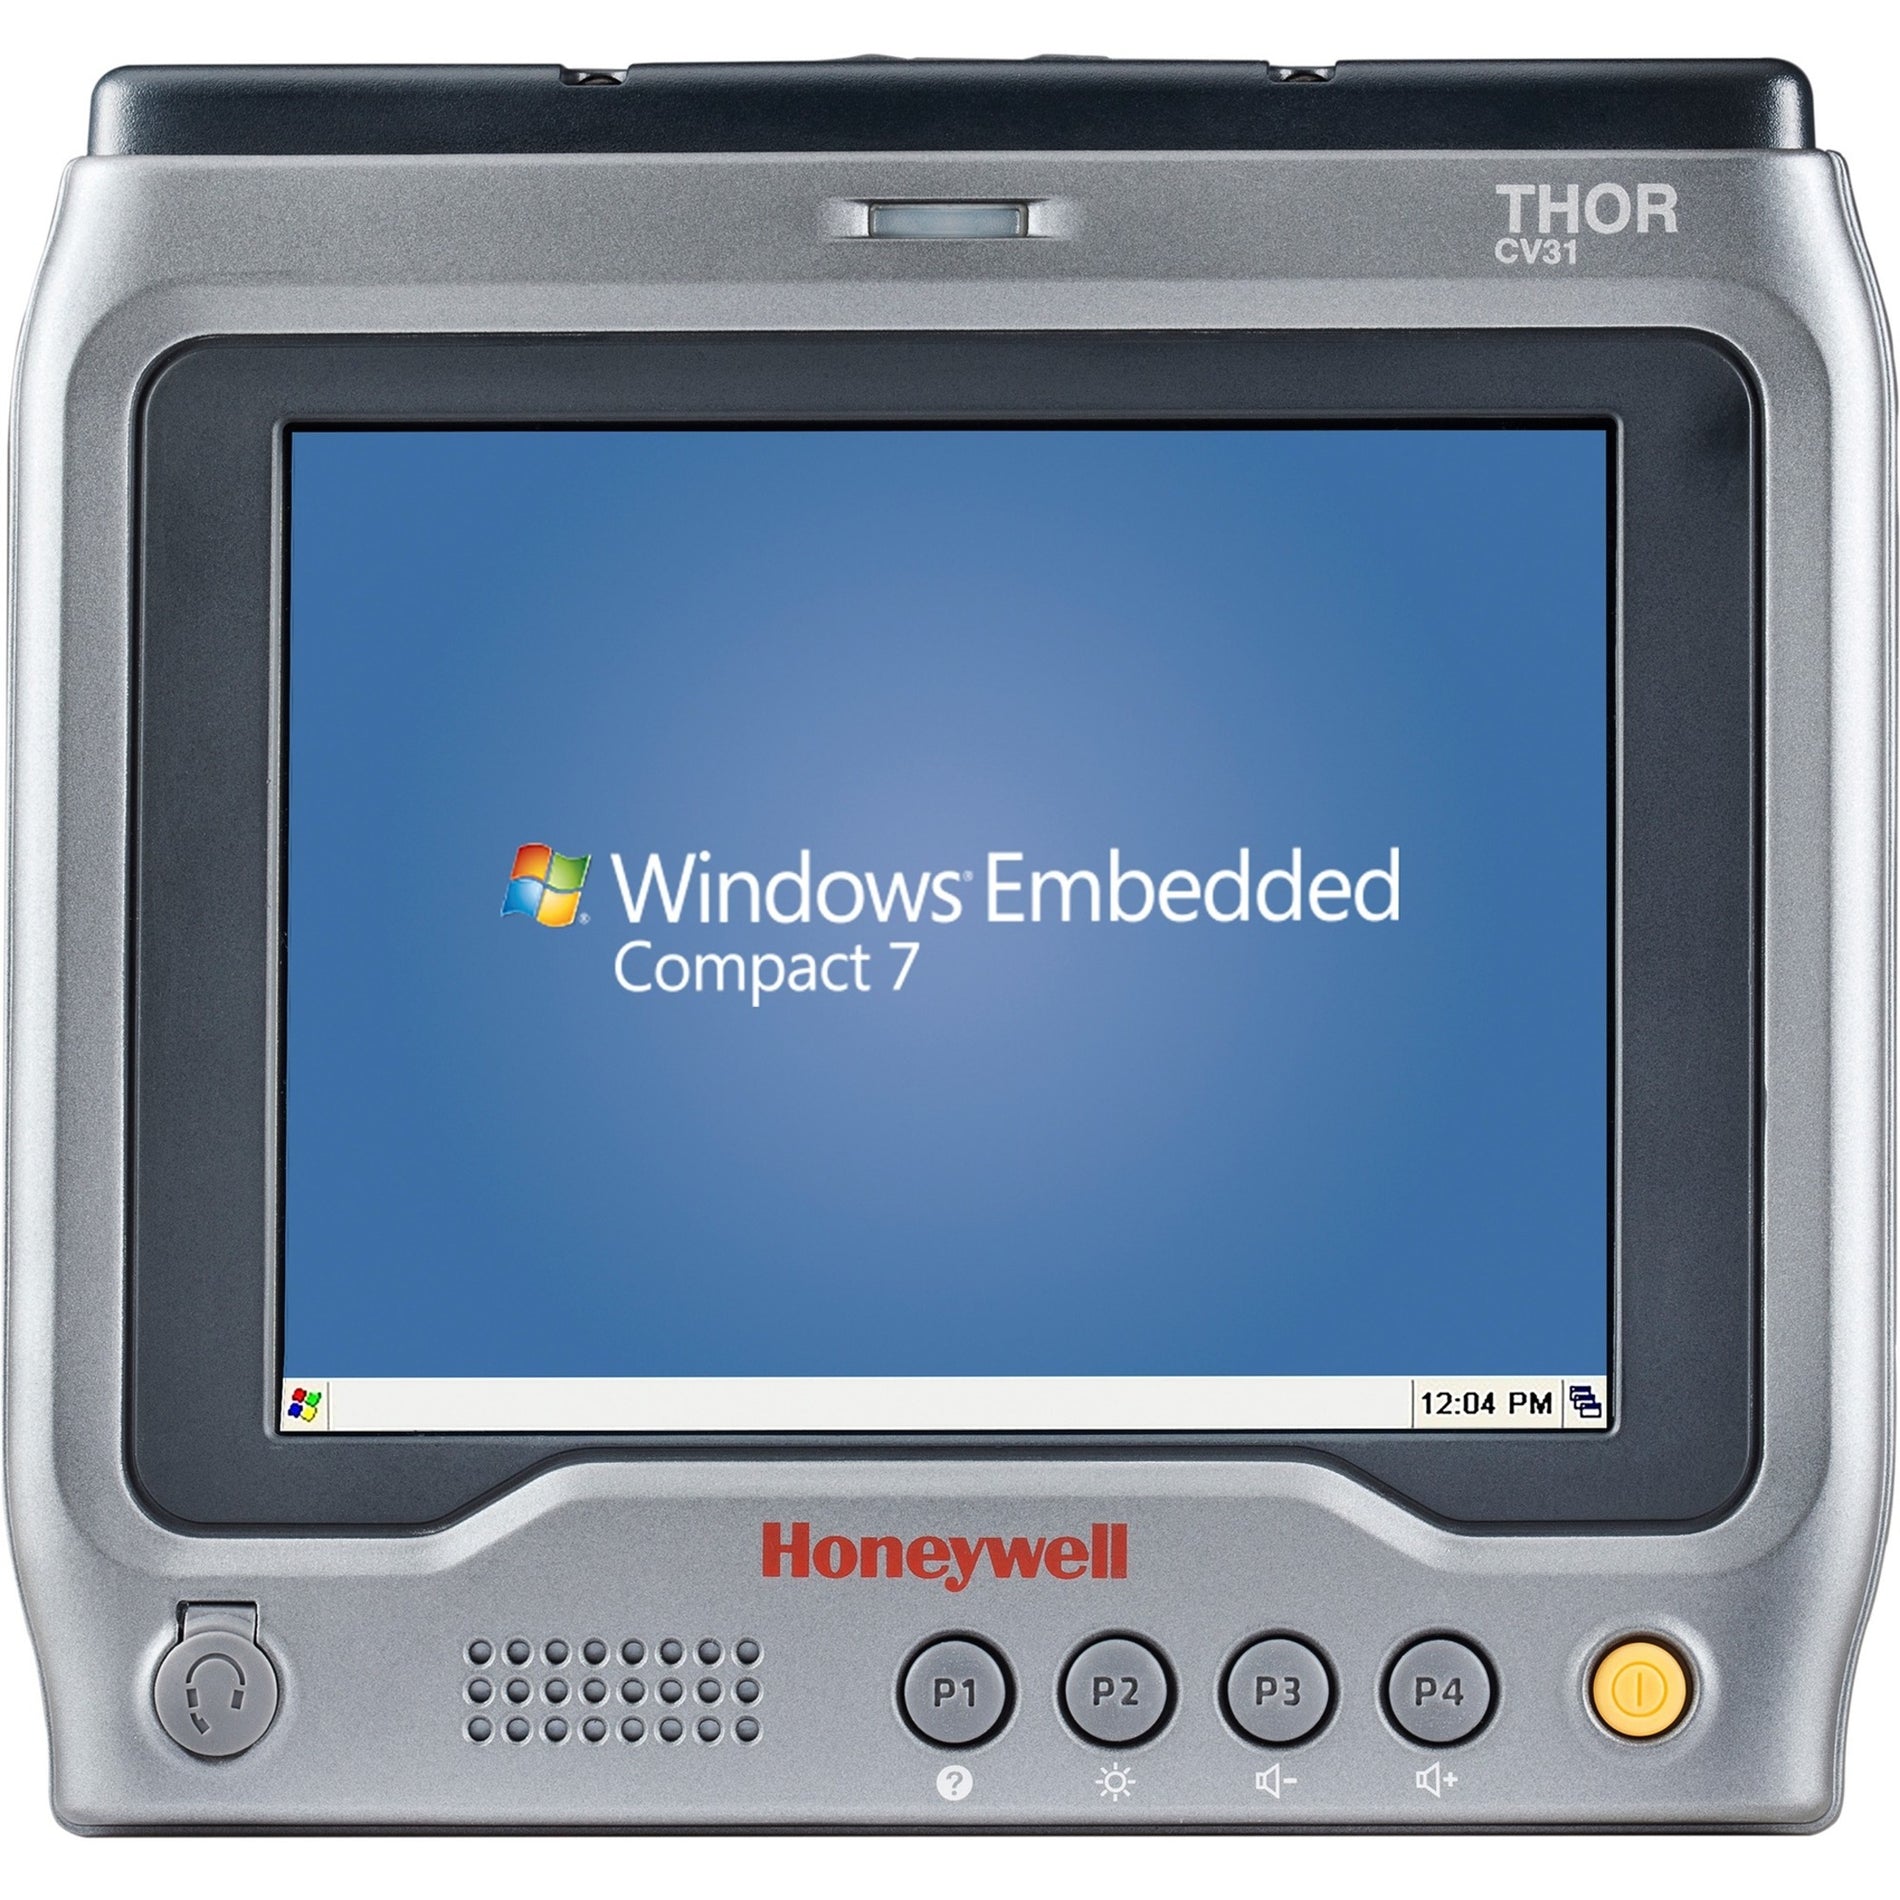 Intermec CV31A1A0ACCP0000 Thor Vehicle-Mount Computer, 6.5" Touchscreen, Windows Embedded Compact 7, 16GB Flash Memory, 1GB RAM